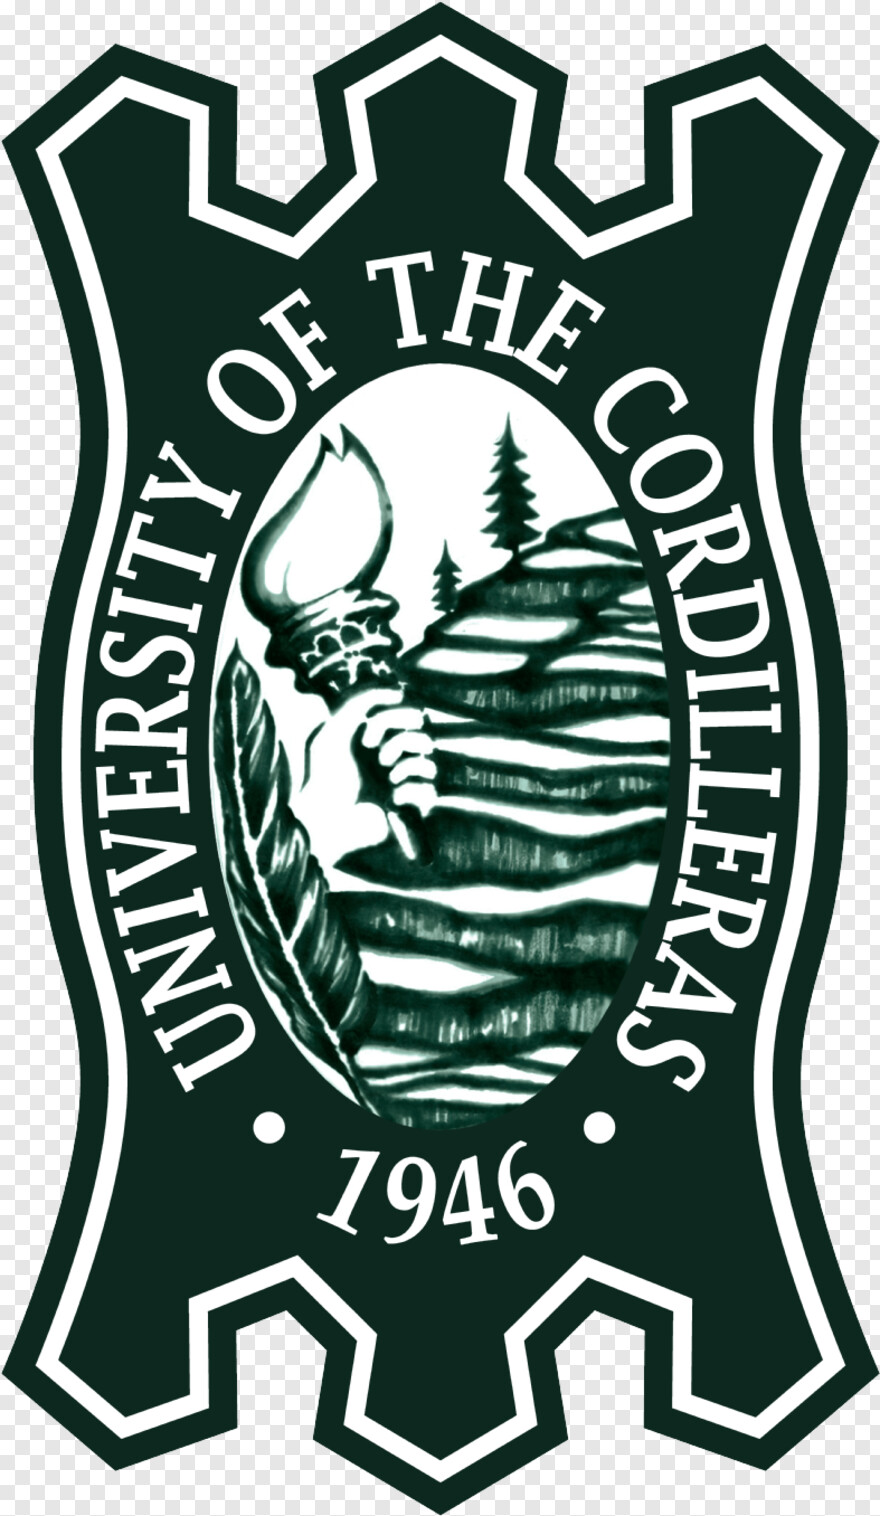 university-of-kentucky-logo # 629950